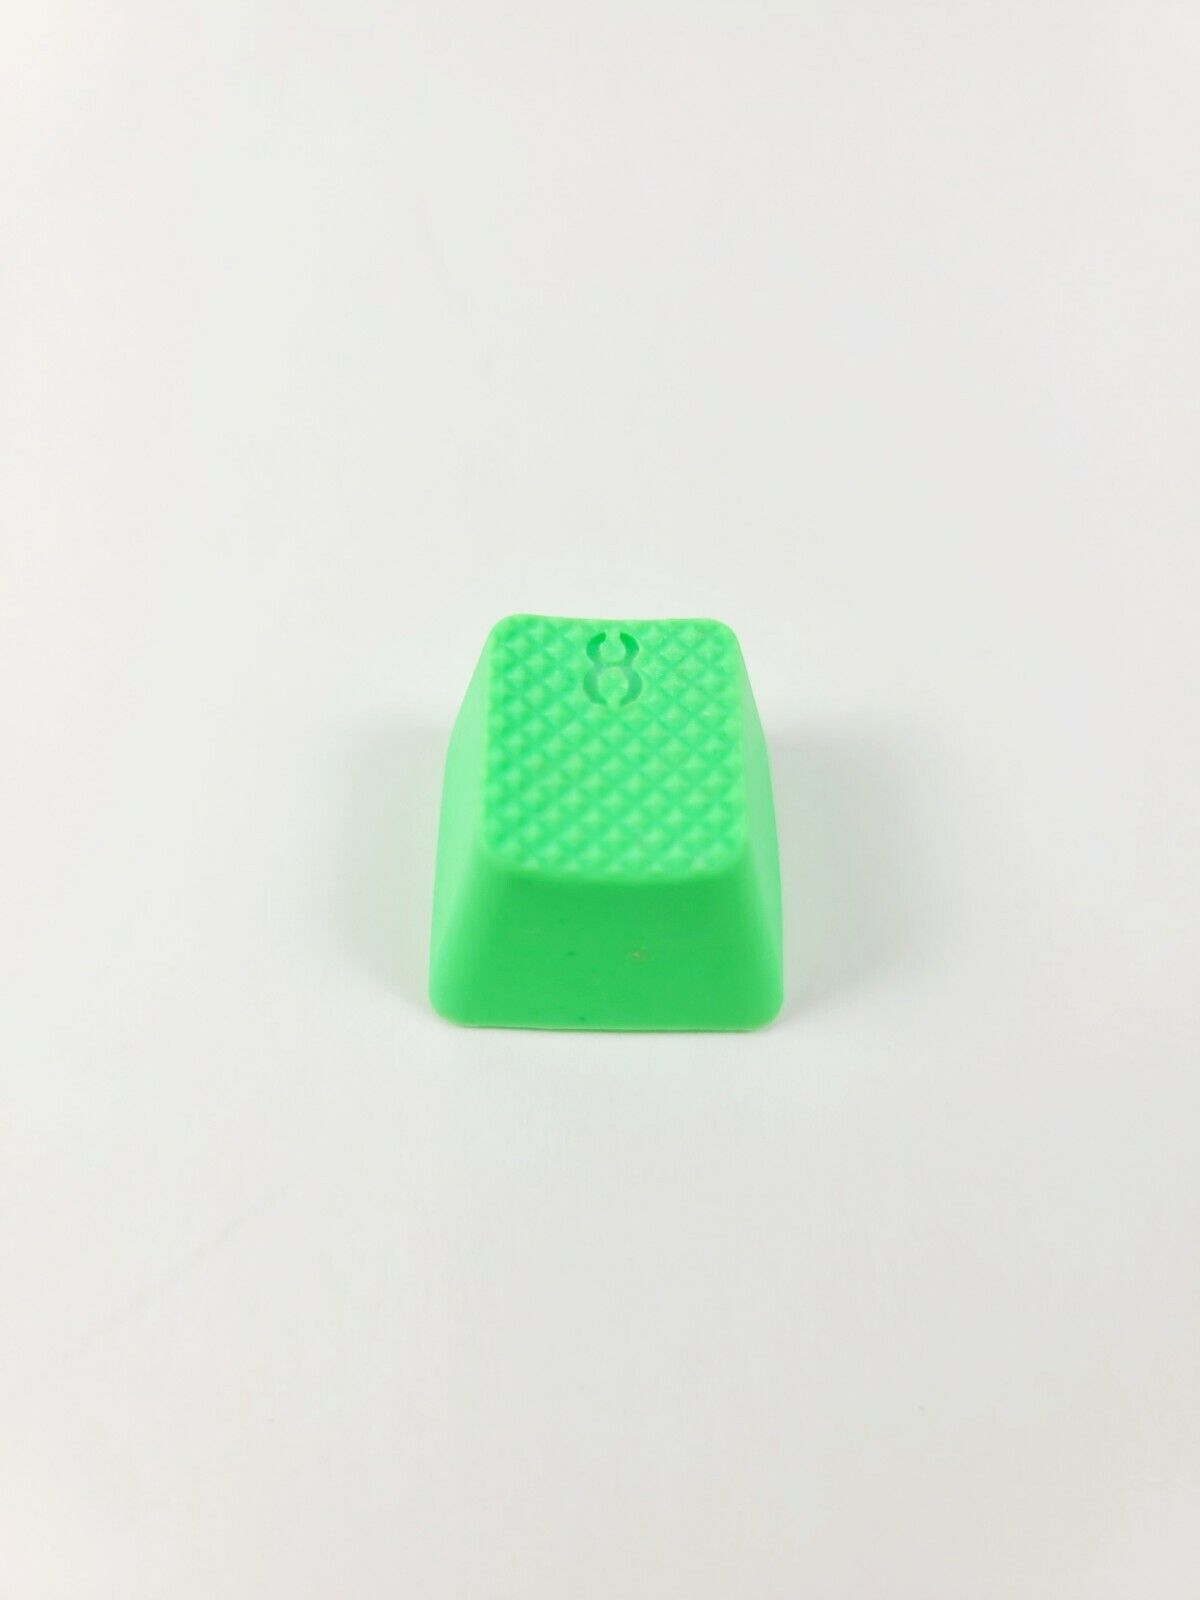 RARE Tai-Hao Neon Green Rubber 8 Keycap Doubleshot Keycap For Cherry Mx